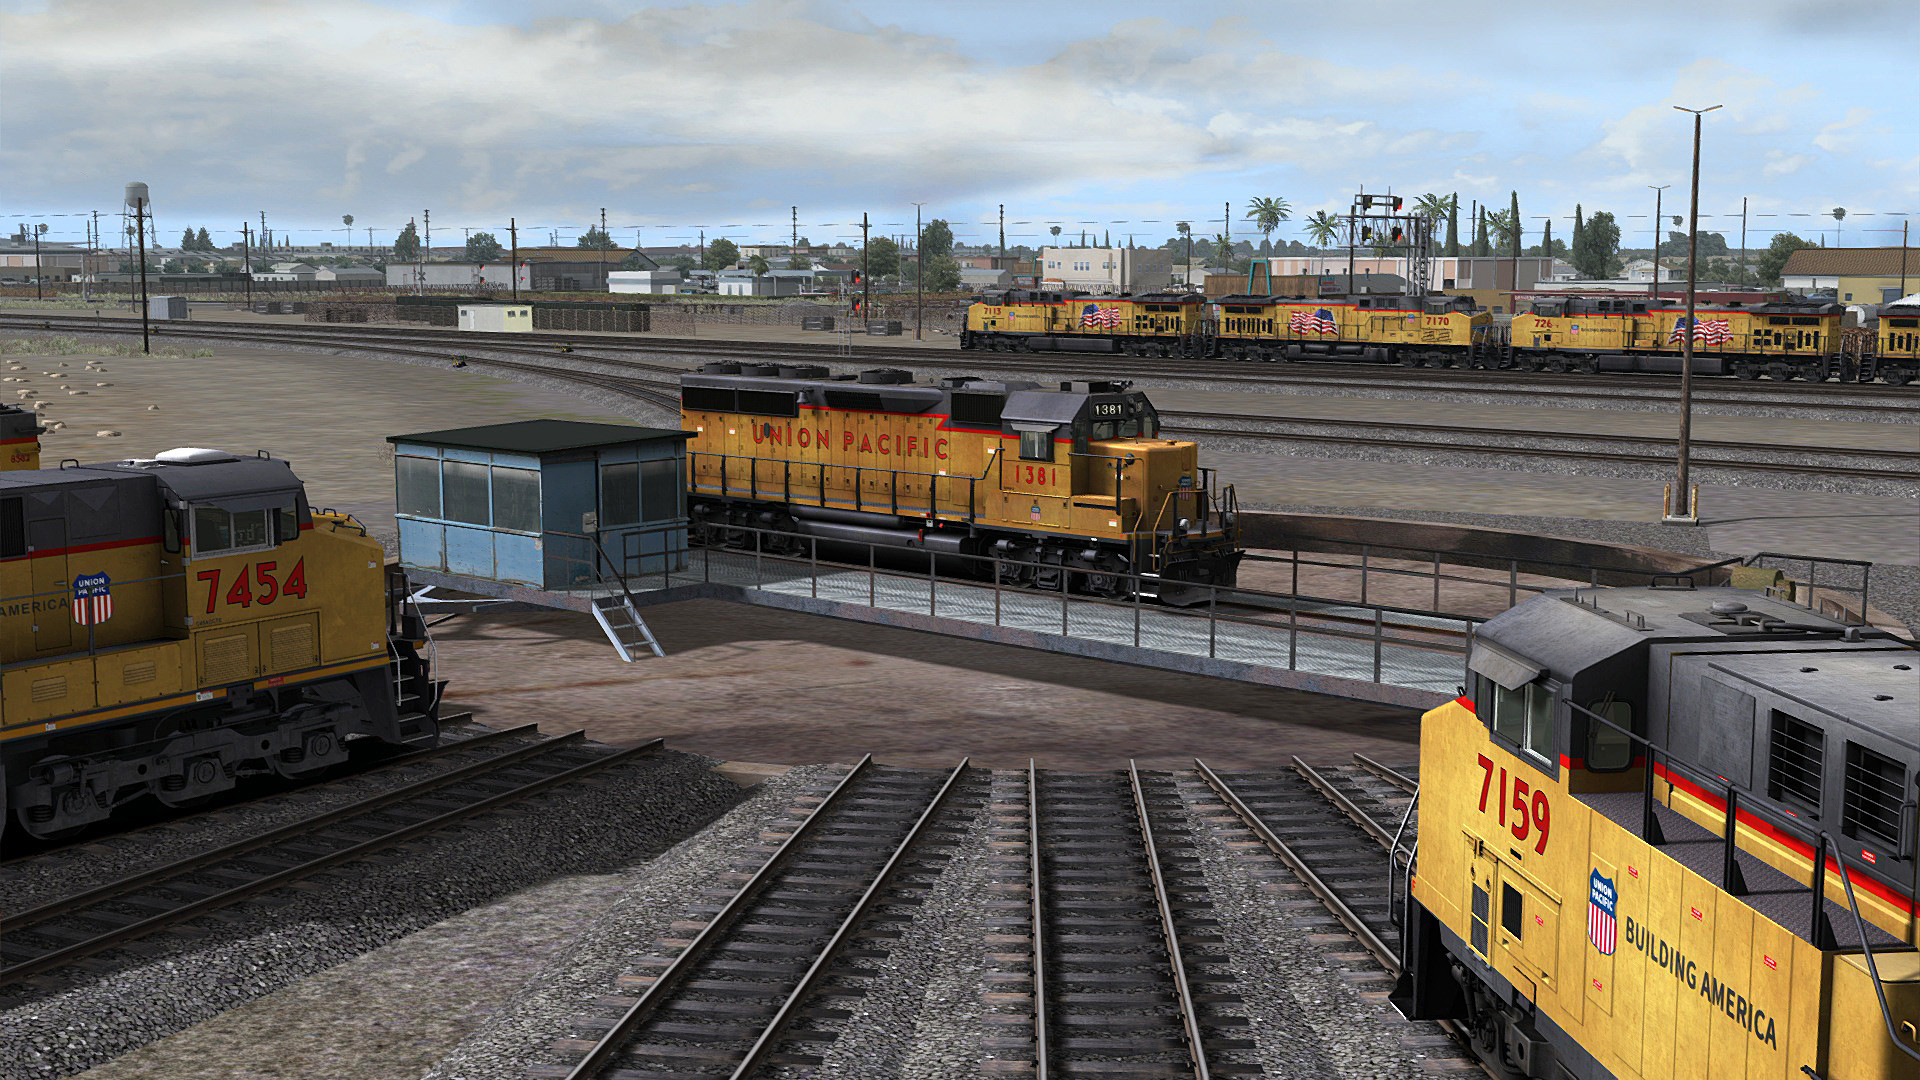 Train Simulator: Tehachapi Pass: Mojave - Bakersfield Route Add-On DLC Steam CD Key